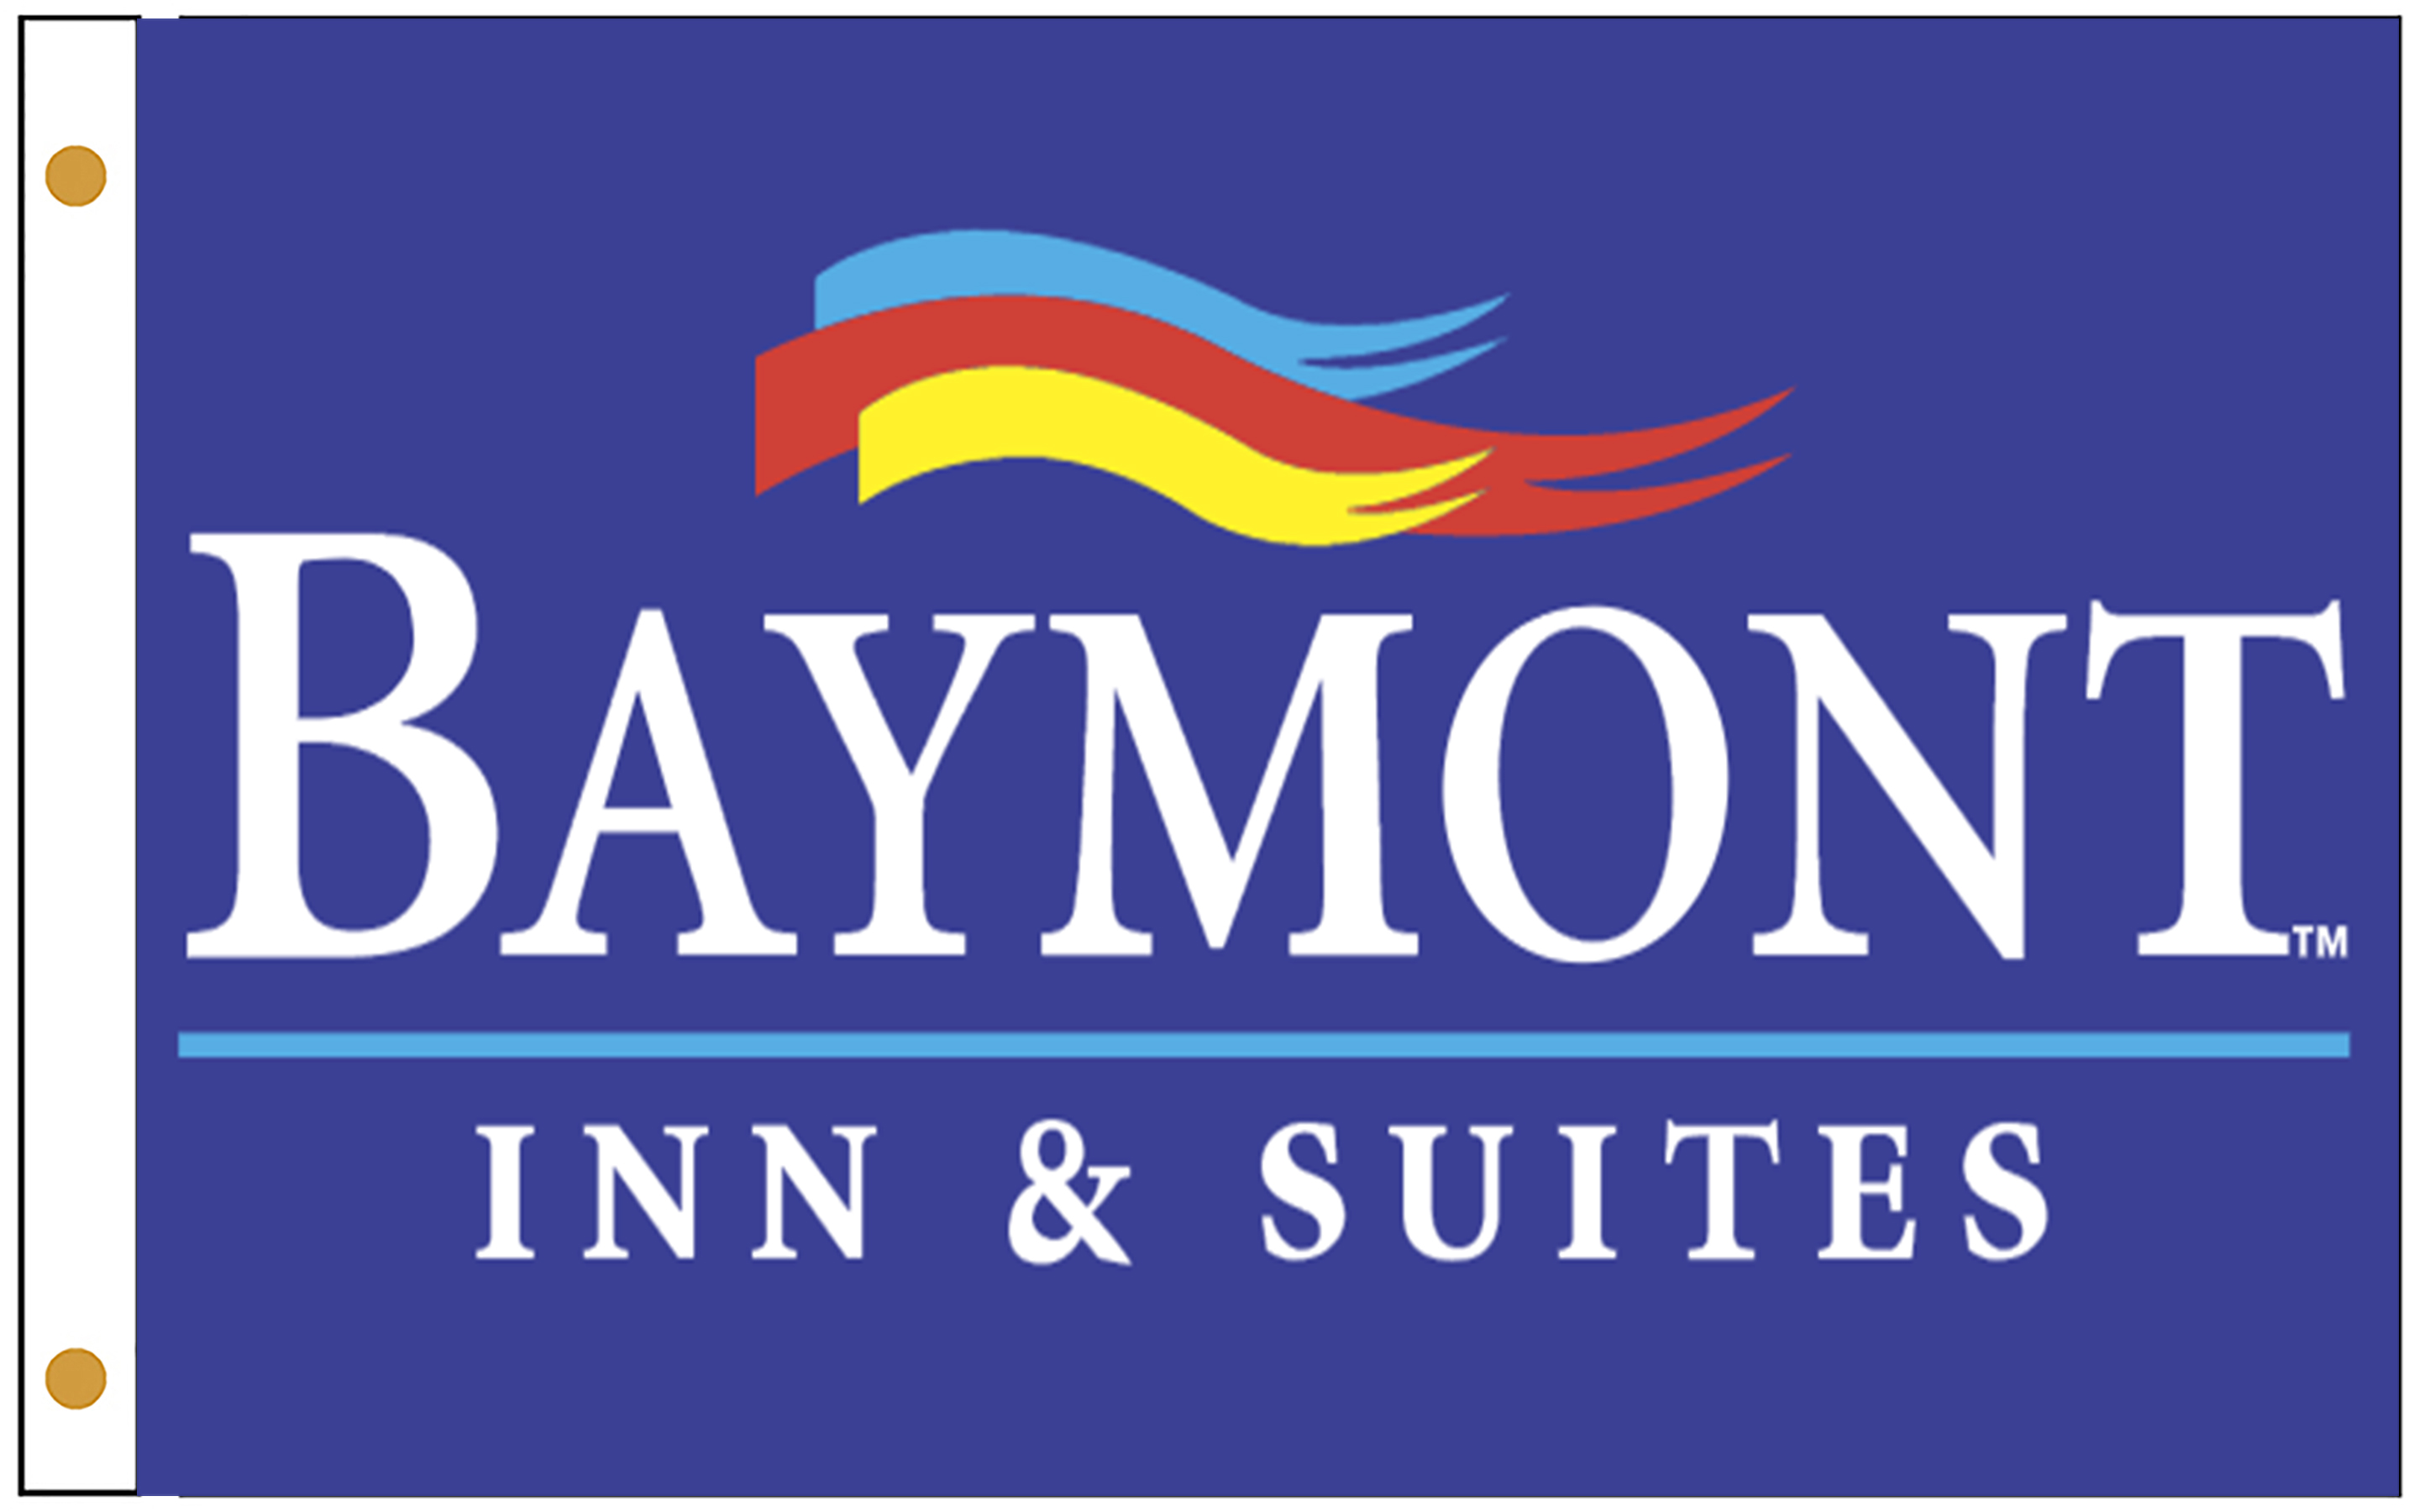 Baymont Hotel Flags